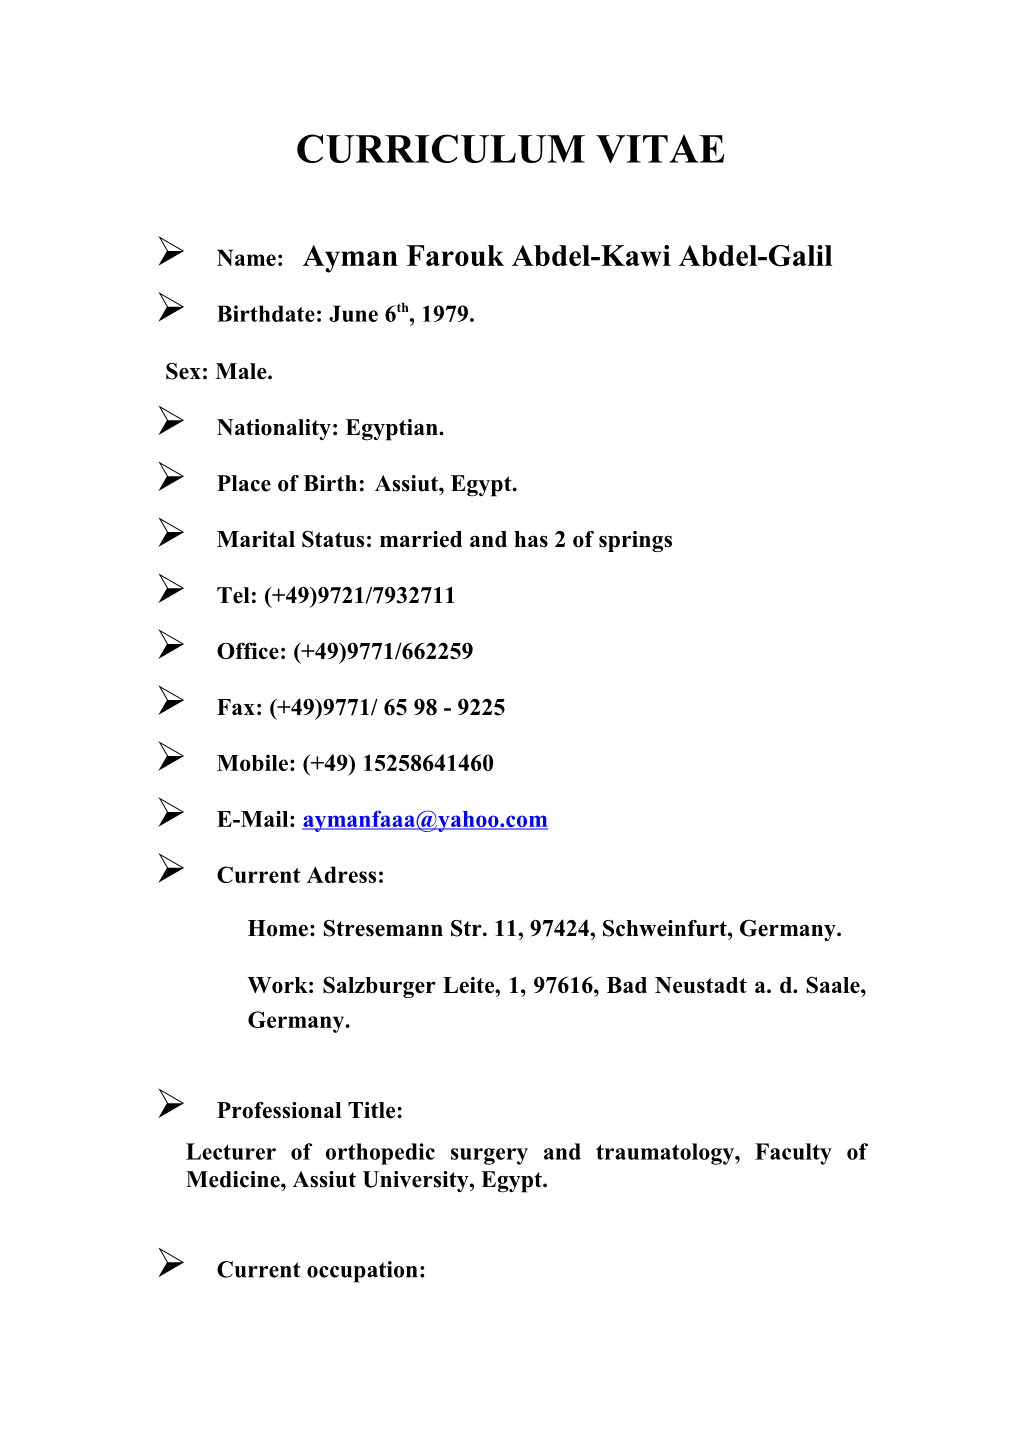 Name: Ayman Farouk Abdel-Kawi Abdel-Galil